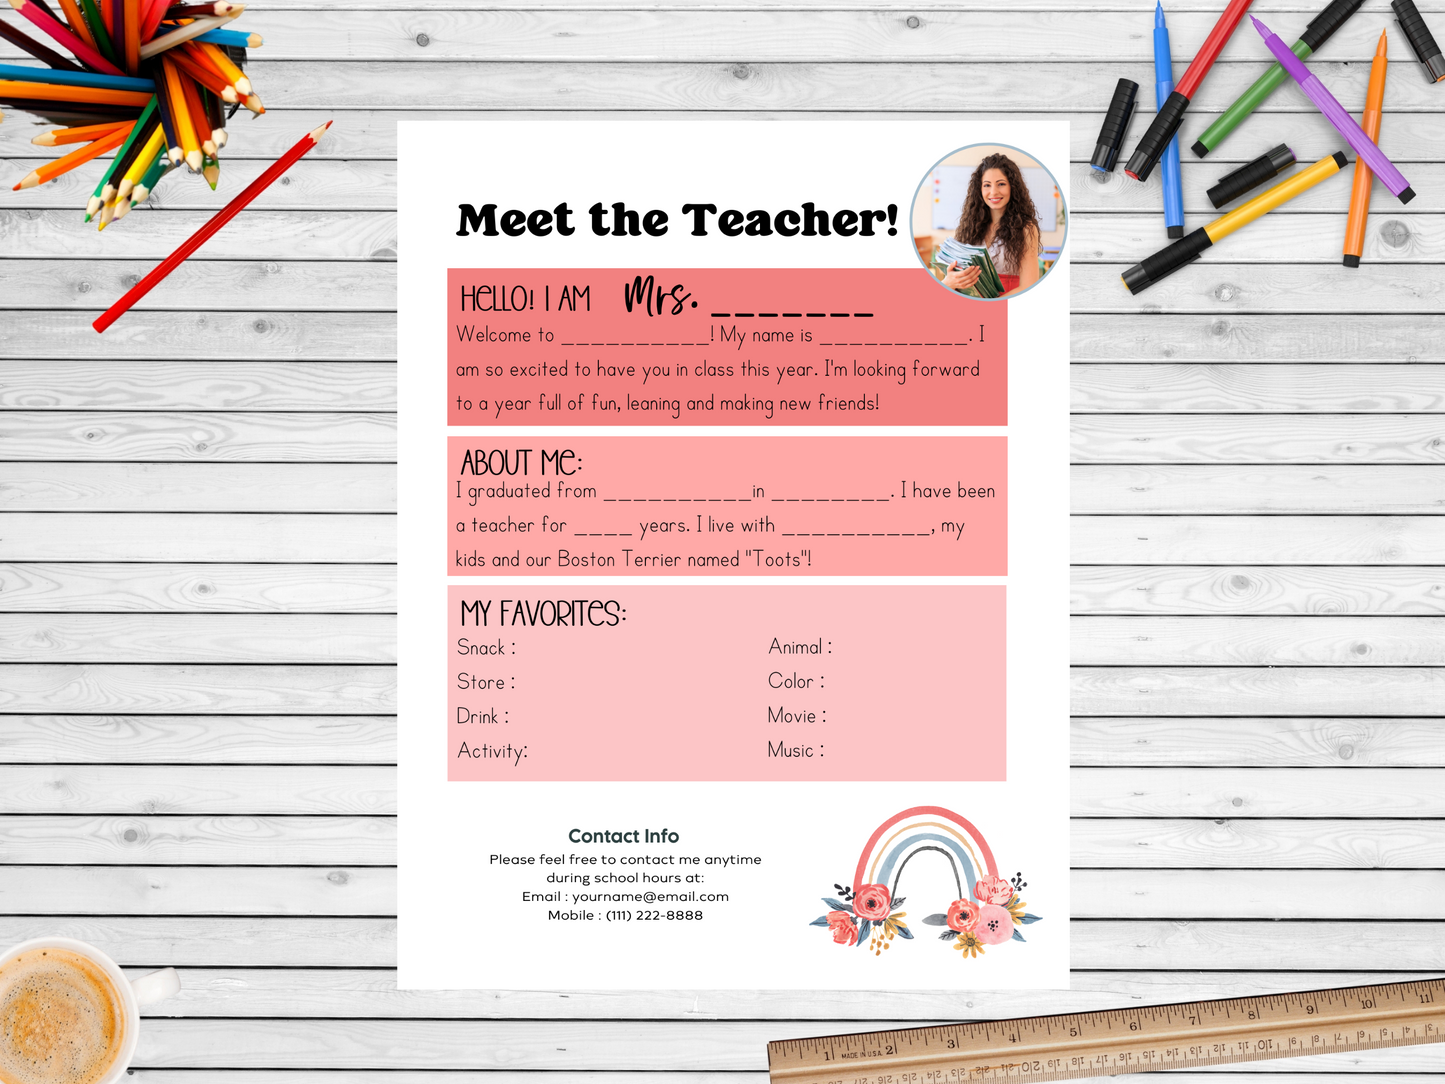 Meet the Teacher Letter Template - Floral Rainbow